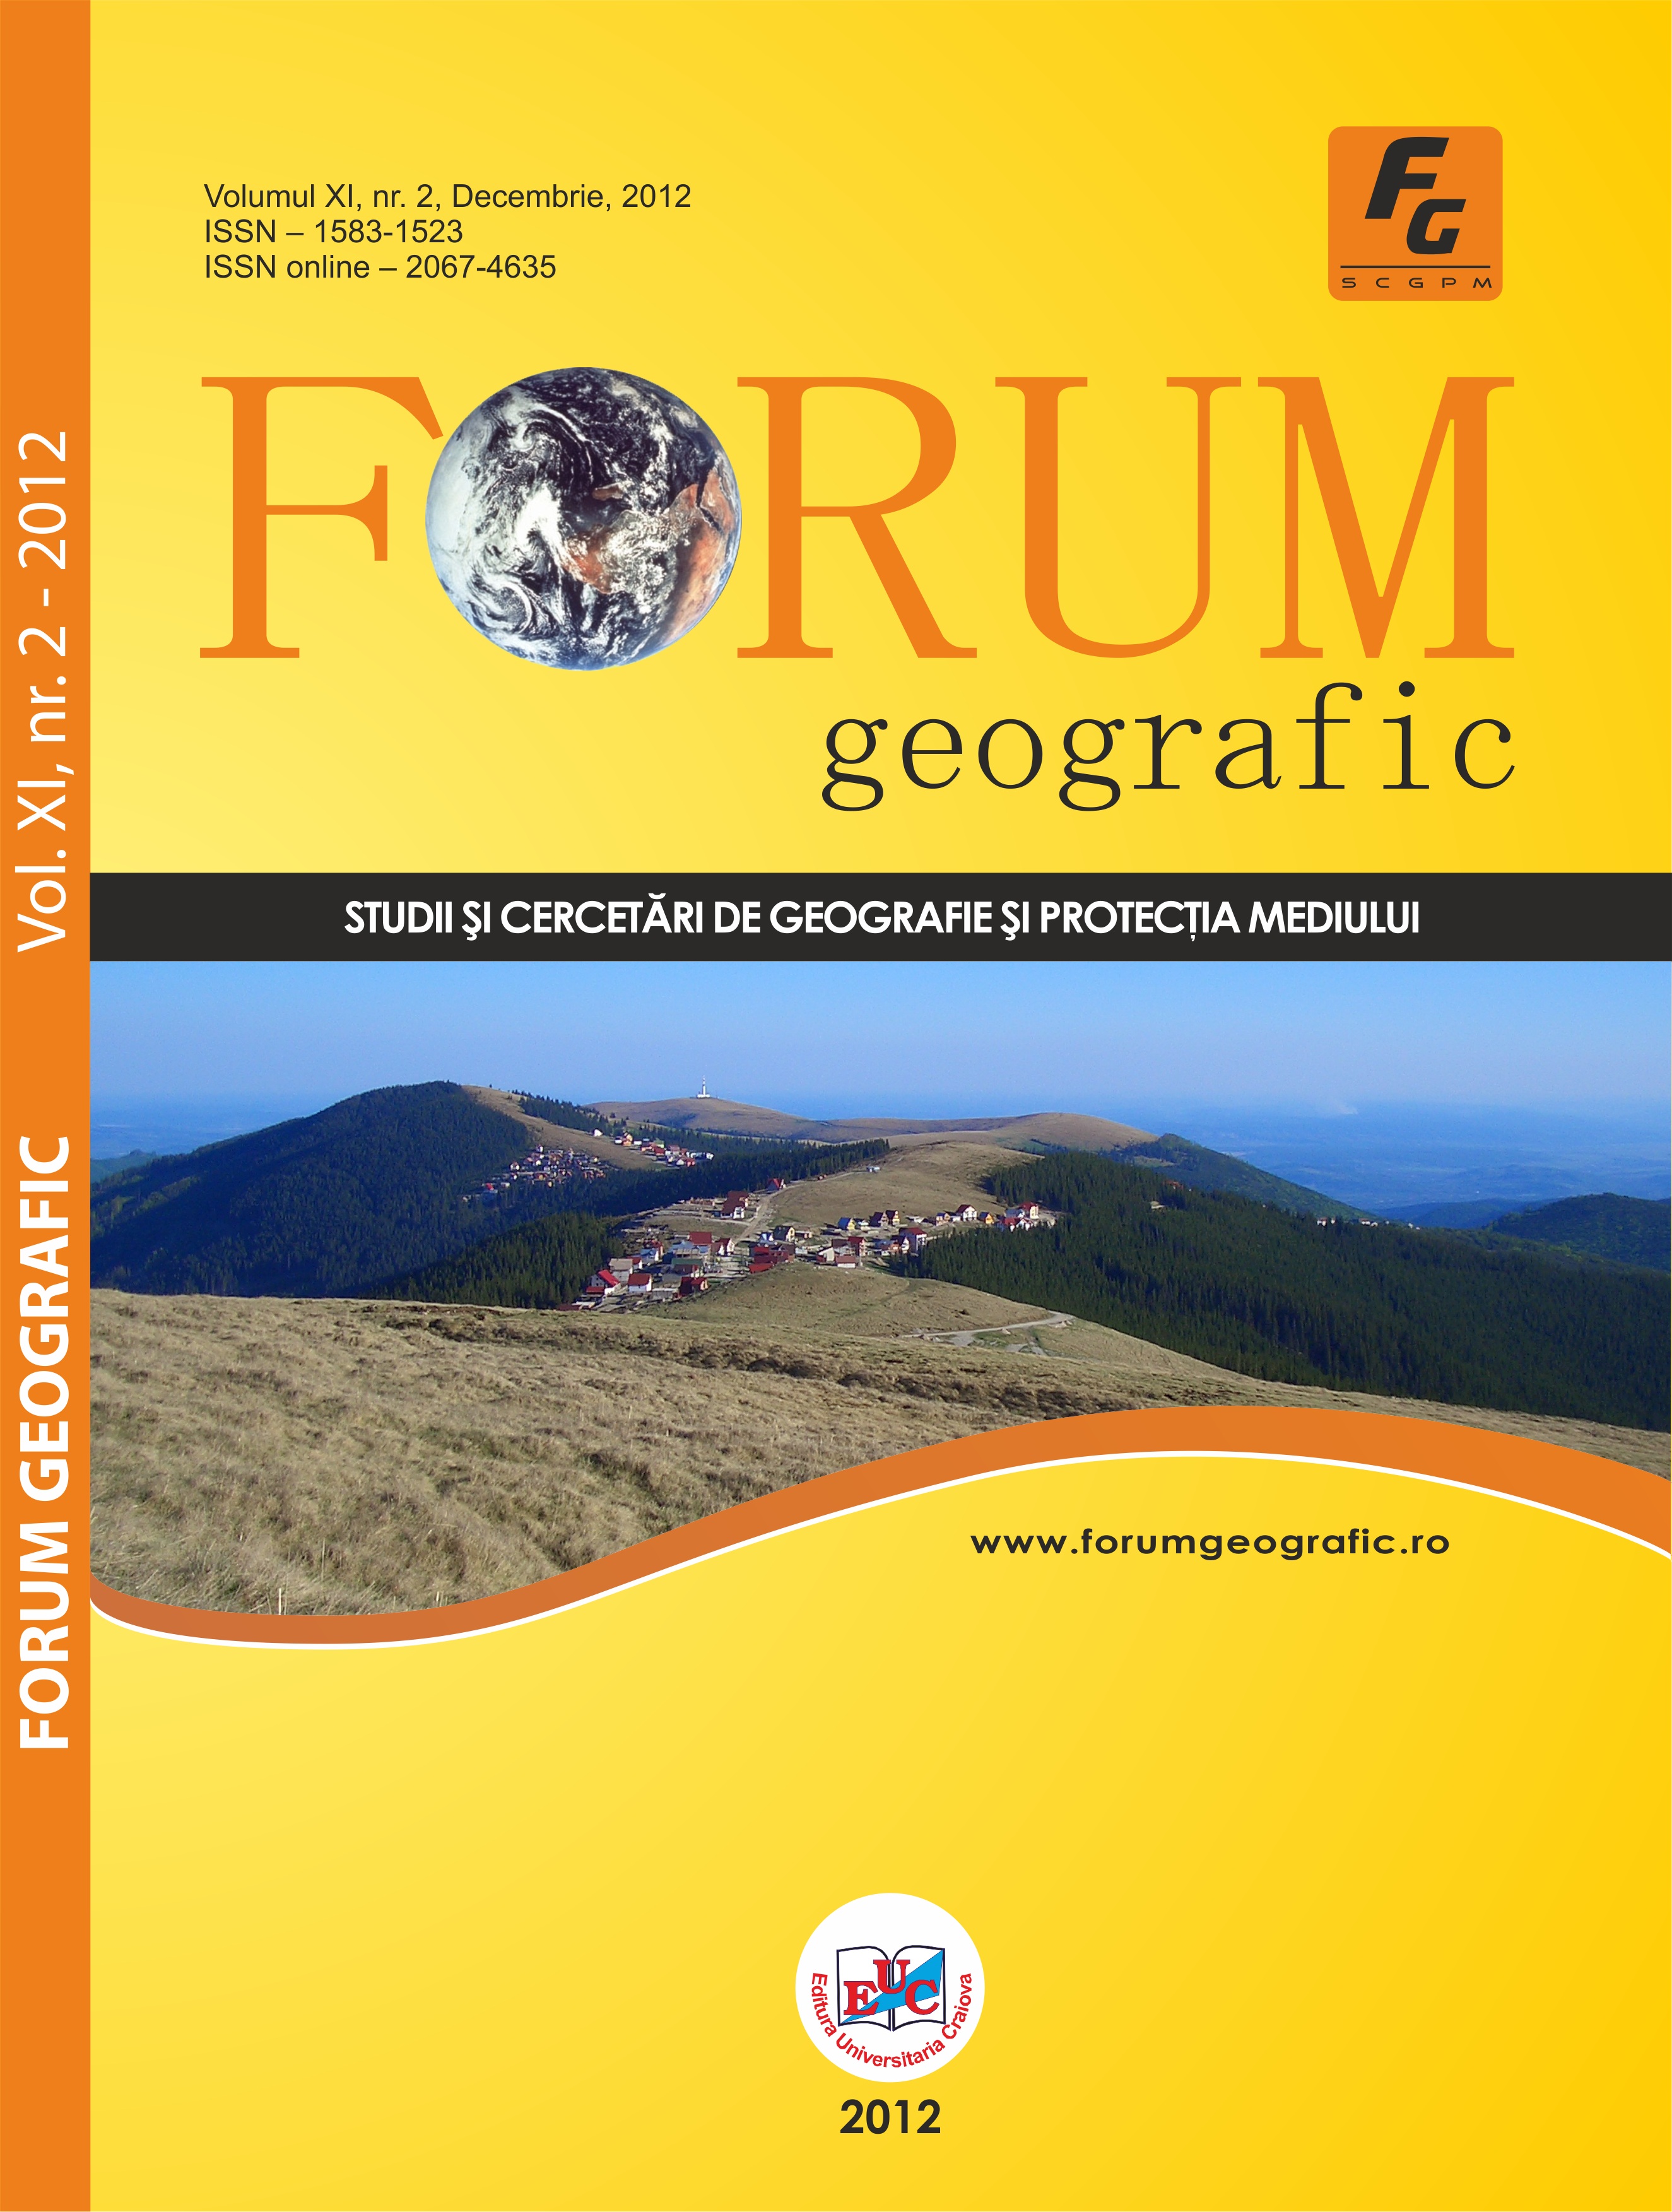 Forum geografic: Volum XI, număr 2